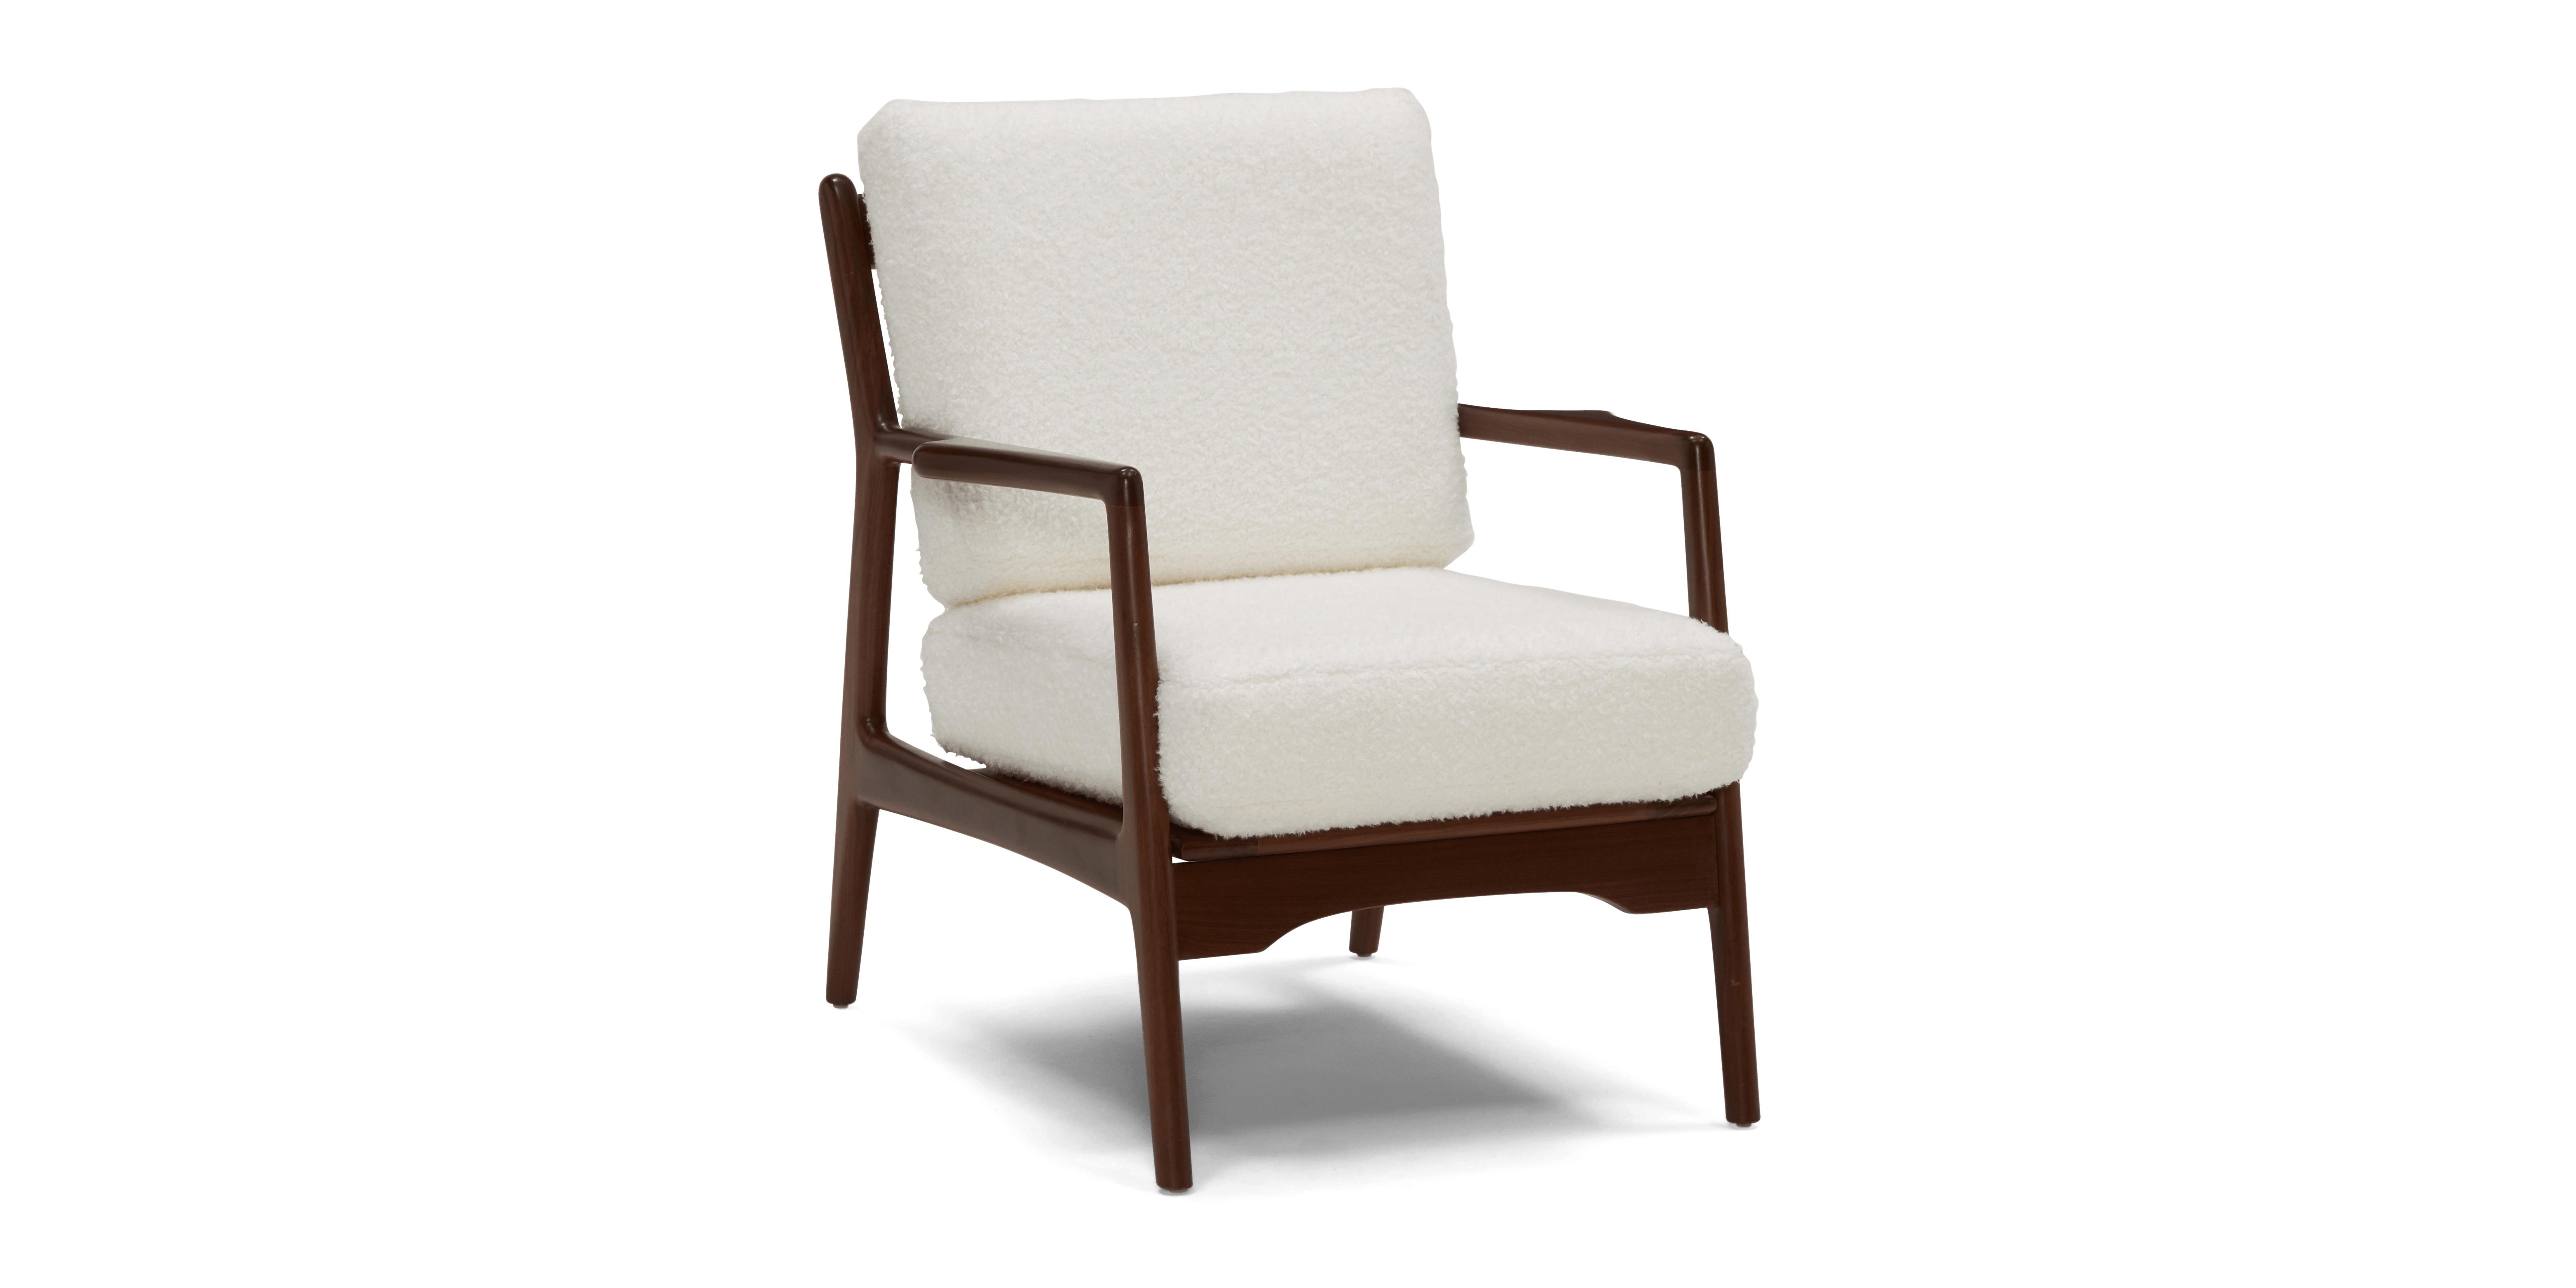 Beige/White Collins Mid Century Modern Chair - Shearling Whisper - Walnut - Image 1